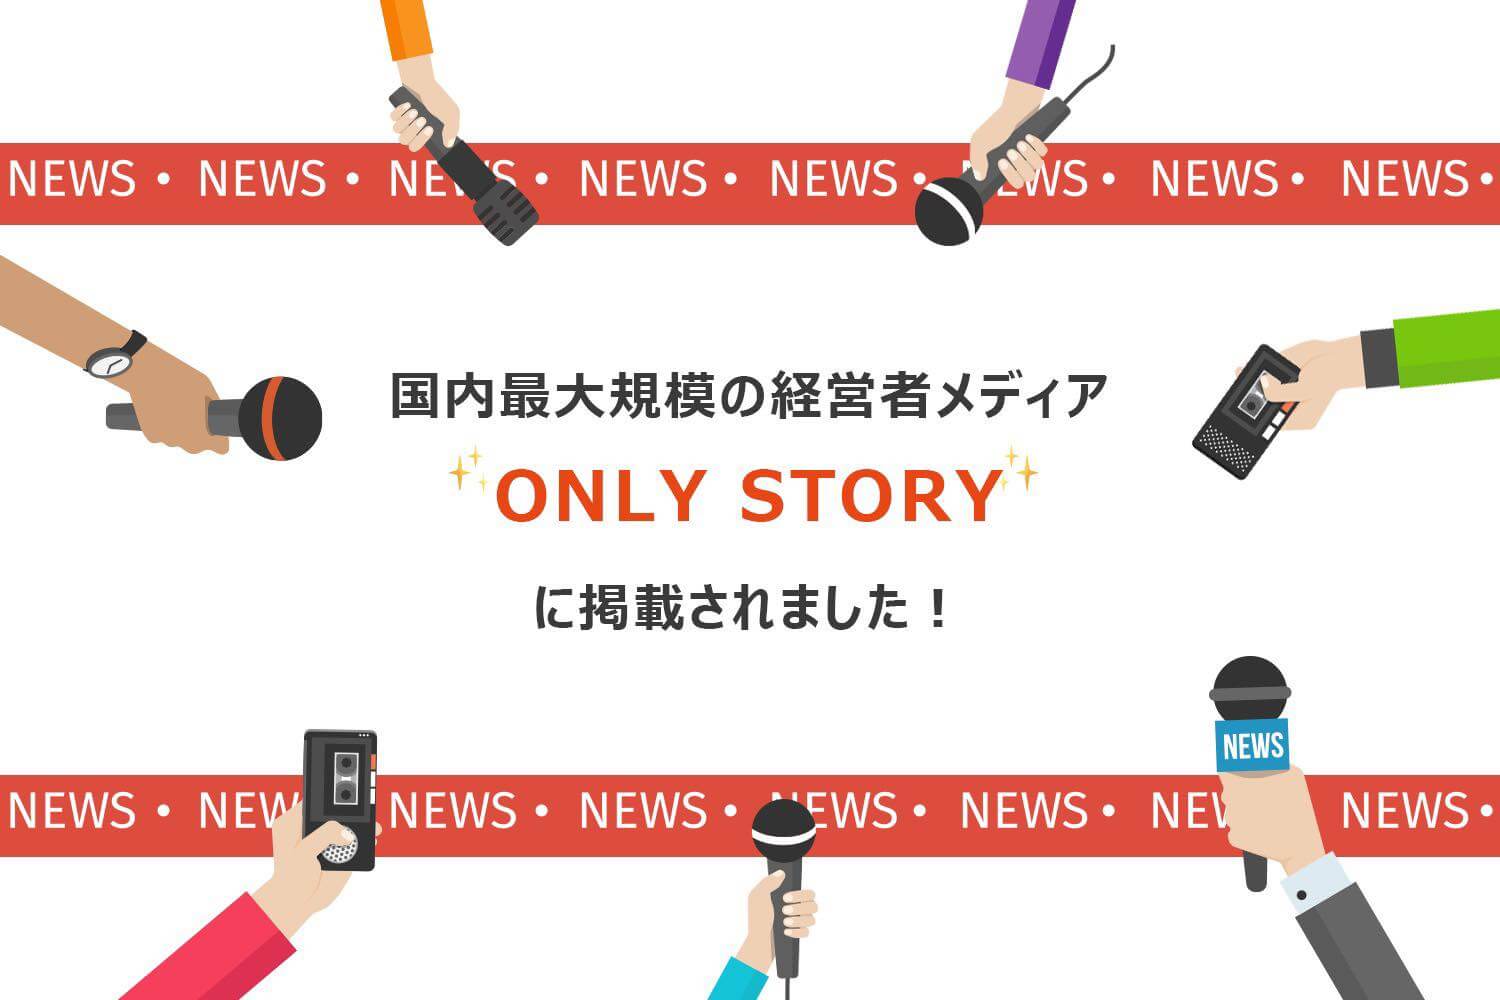 「ONLY STORY」にて弊社執行役員 神本のインタビュー記事が掲載されました。